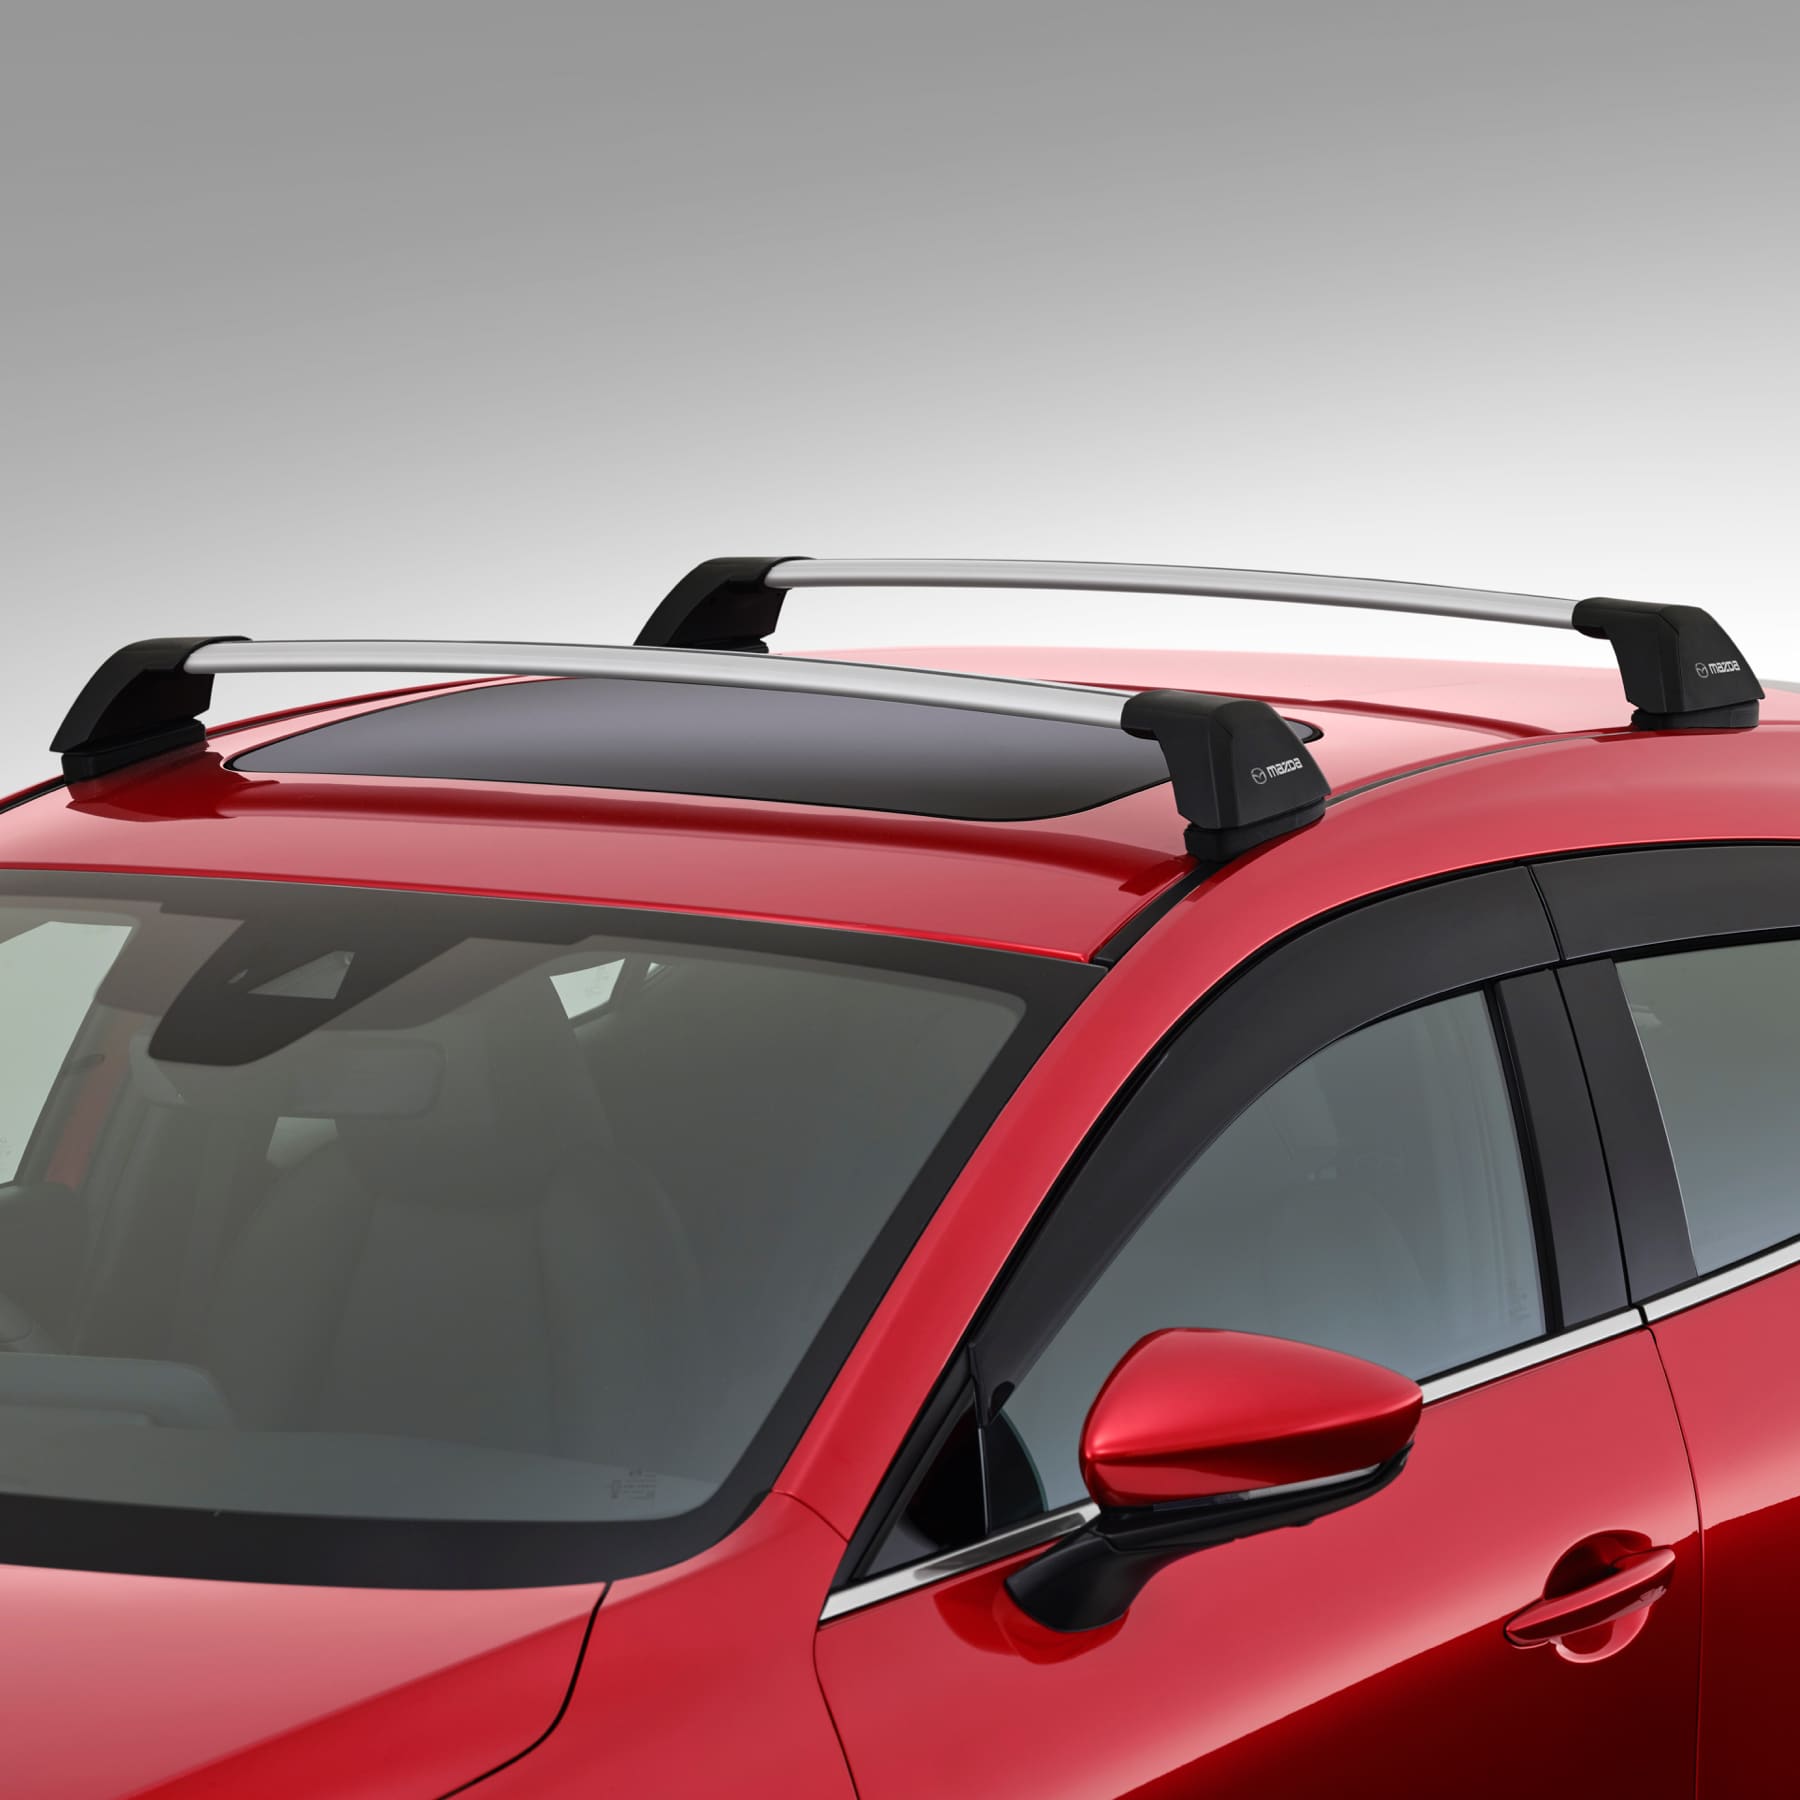 Roof Rack Hatch Mazda Accessories